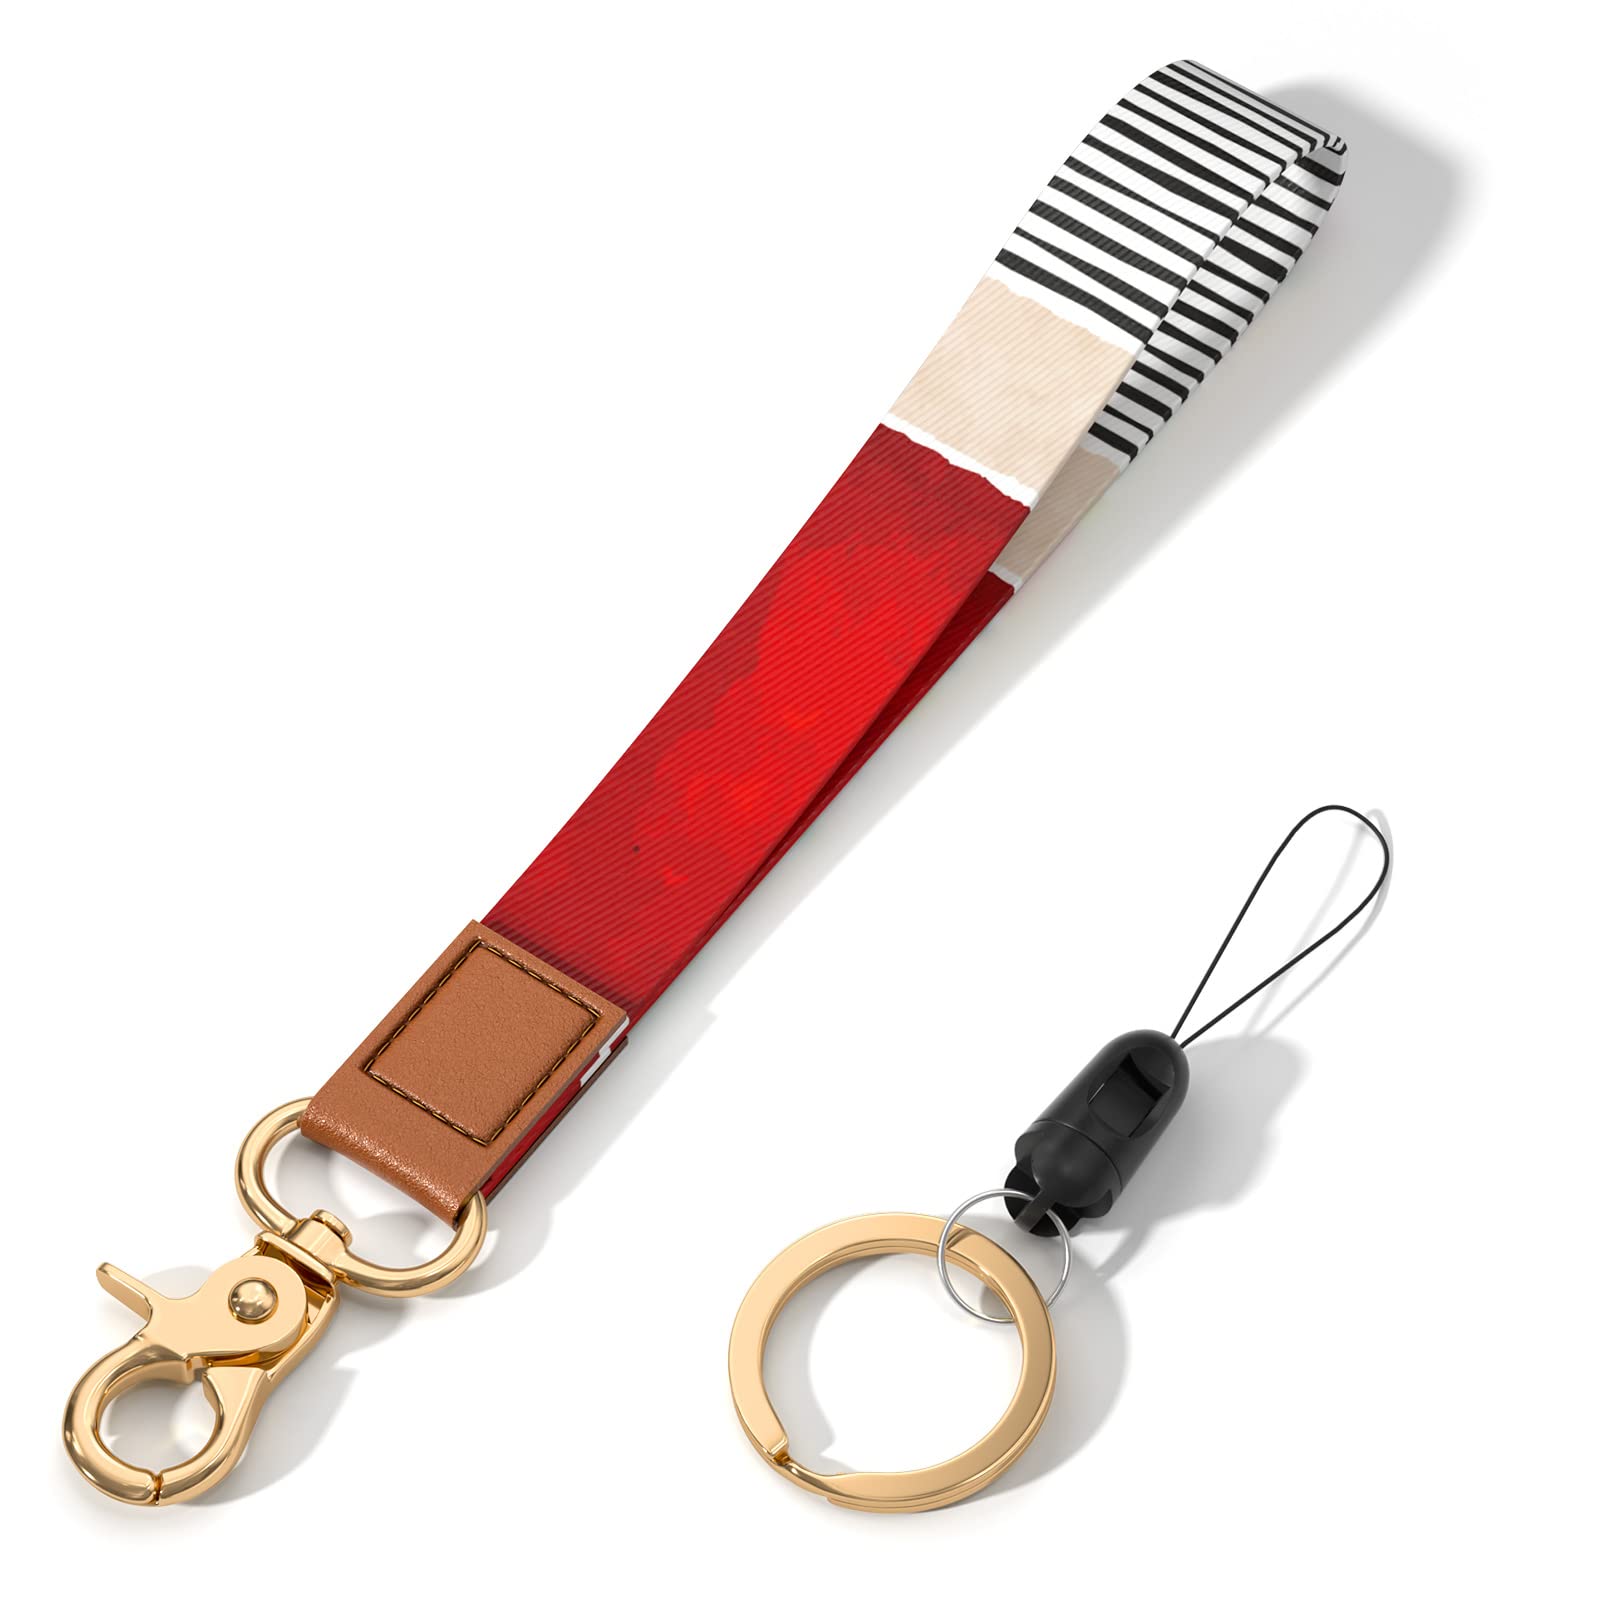 Hsxnam Wrist Lanyard Key Chain, Cute Wristlet Strap Keychain Holder for Women Keys Car Airpods ID Badges Phone, Black Red